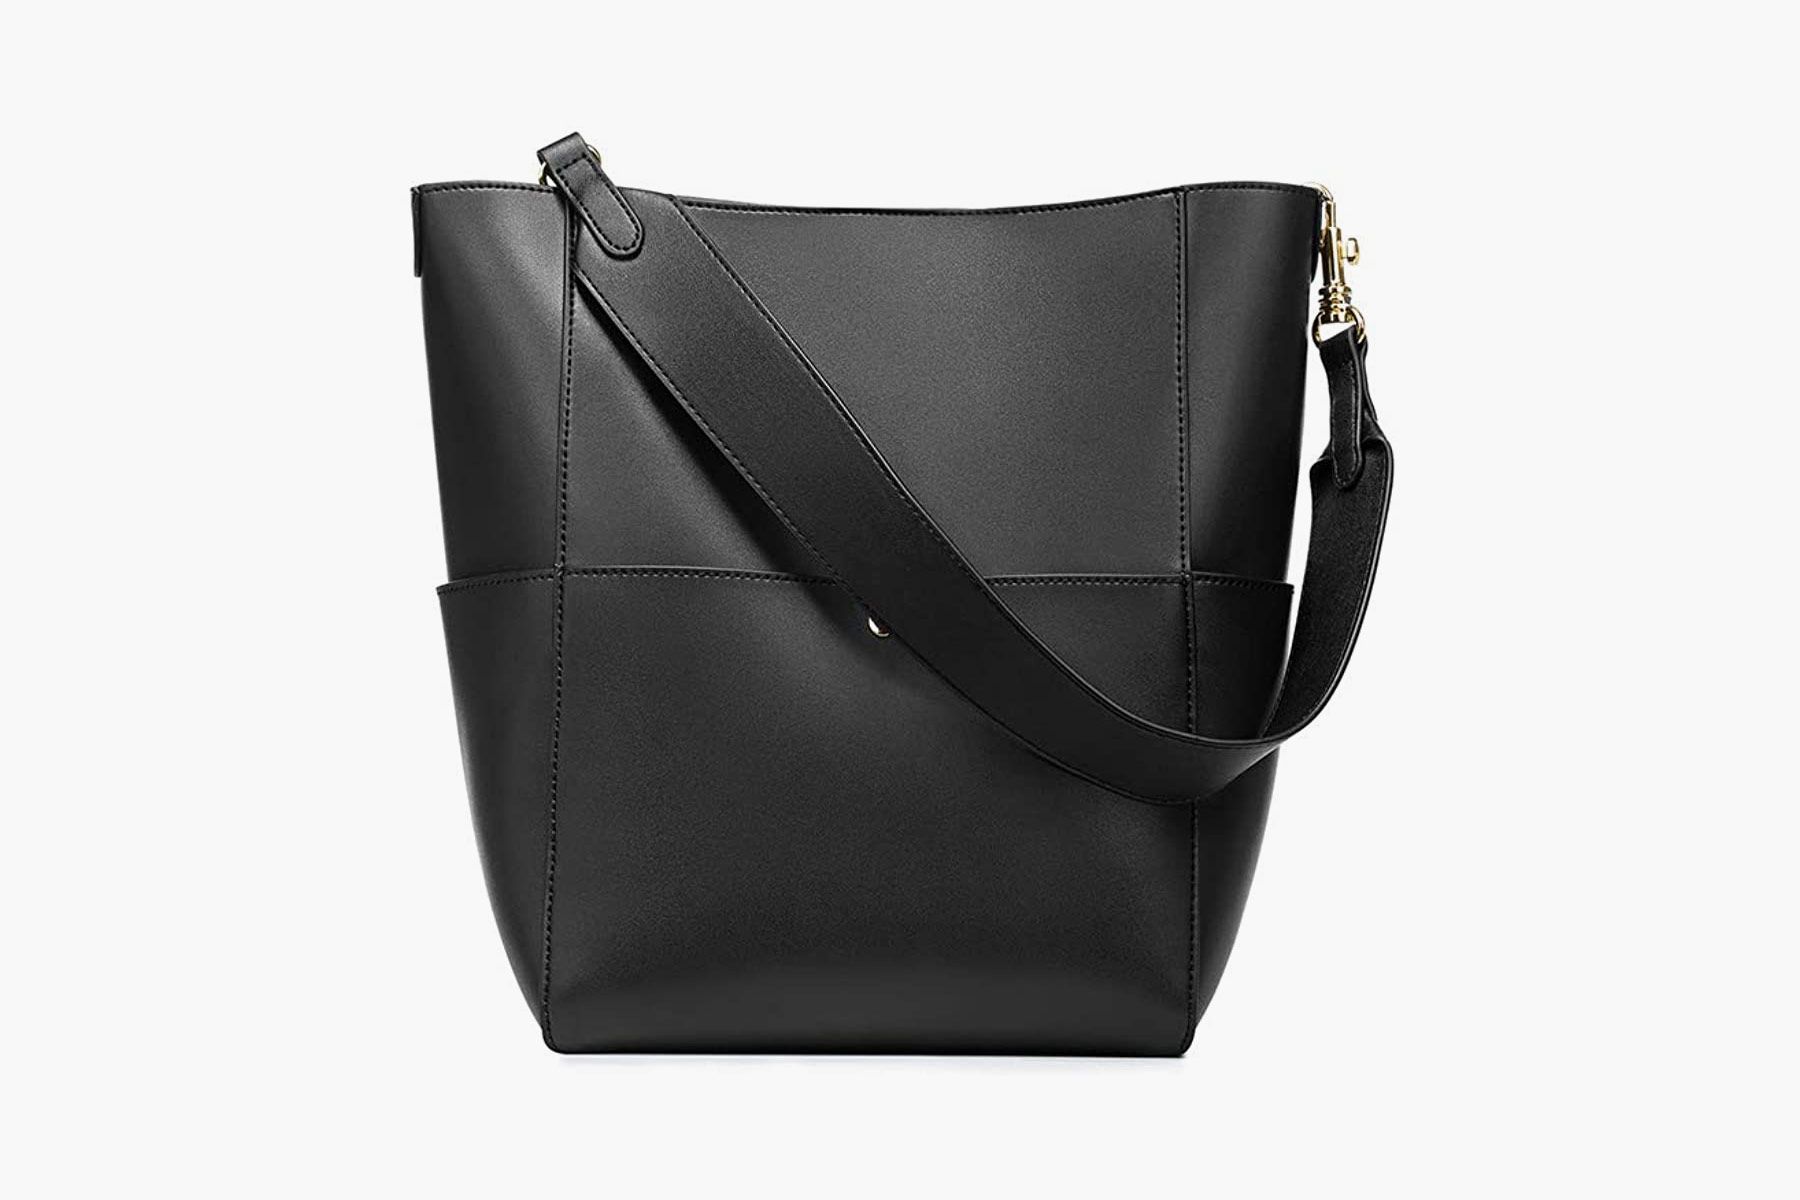 Mn&Sue Handbags for Women Fashion Designer Work Tote Top Handle Messenger Bag Shoulder Bag Satchel Purse